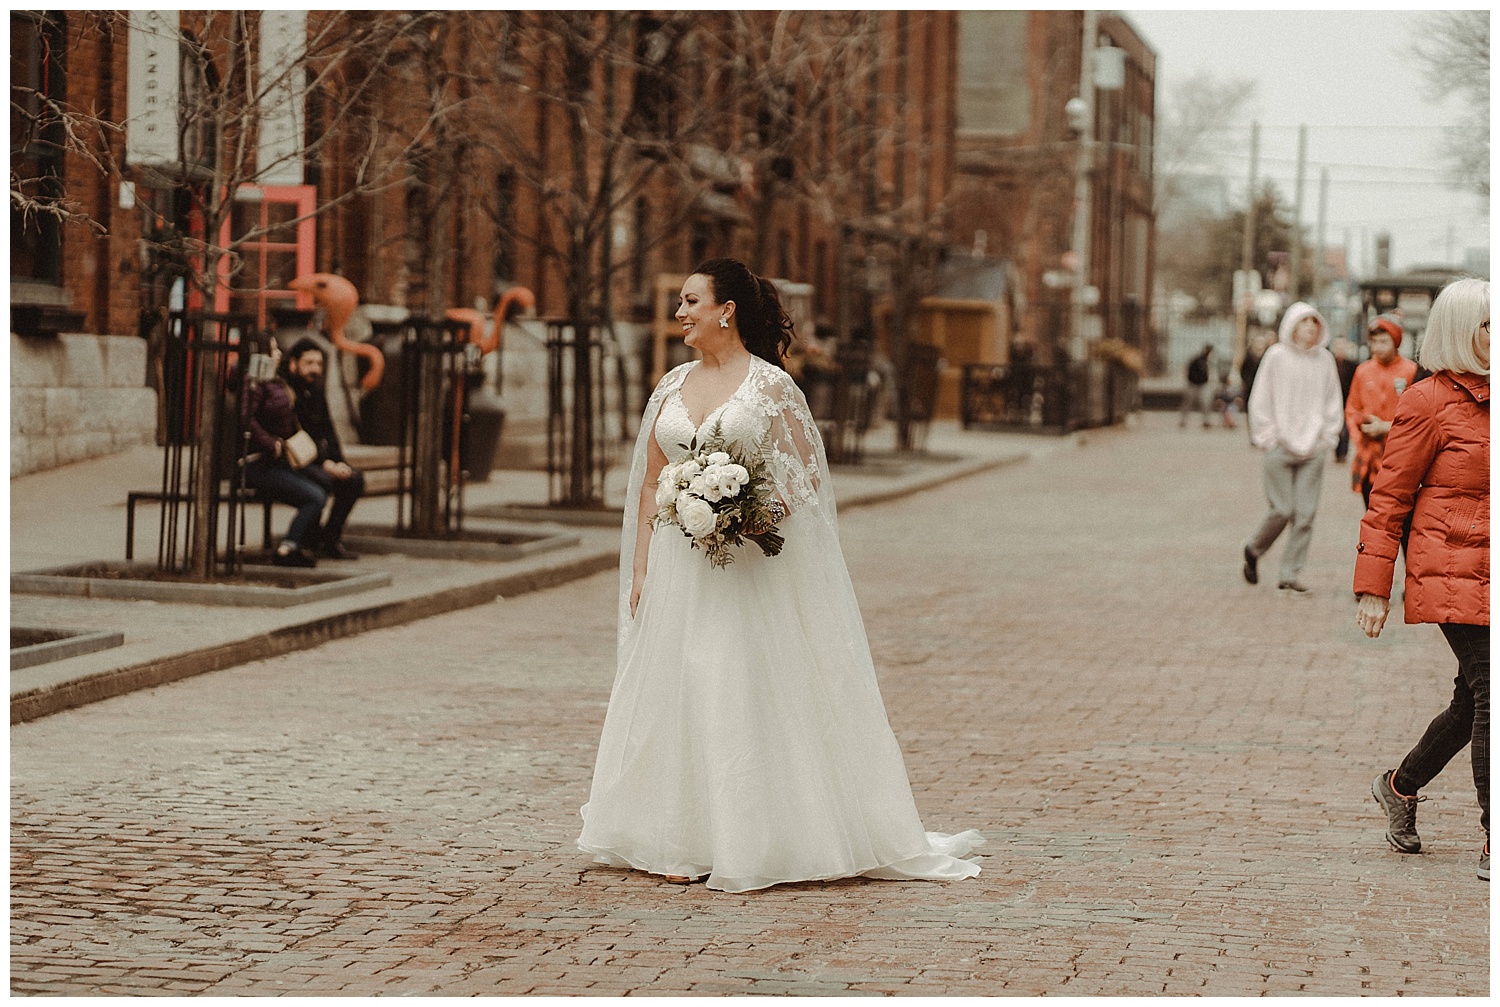 Katie Marie Photography | Archeo Wedding Arta Gallery Wedding | Distillery District Wedding | Toronto Wedding Photographer | Hamilton Toronto Ontario Wedding Photographer |_0001.jpg